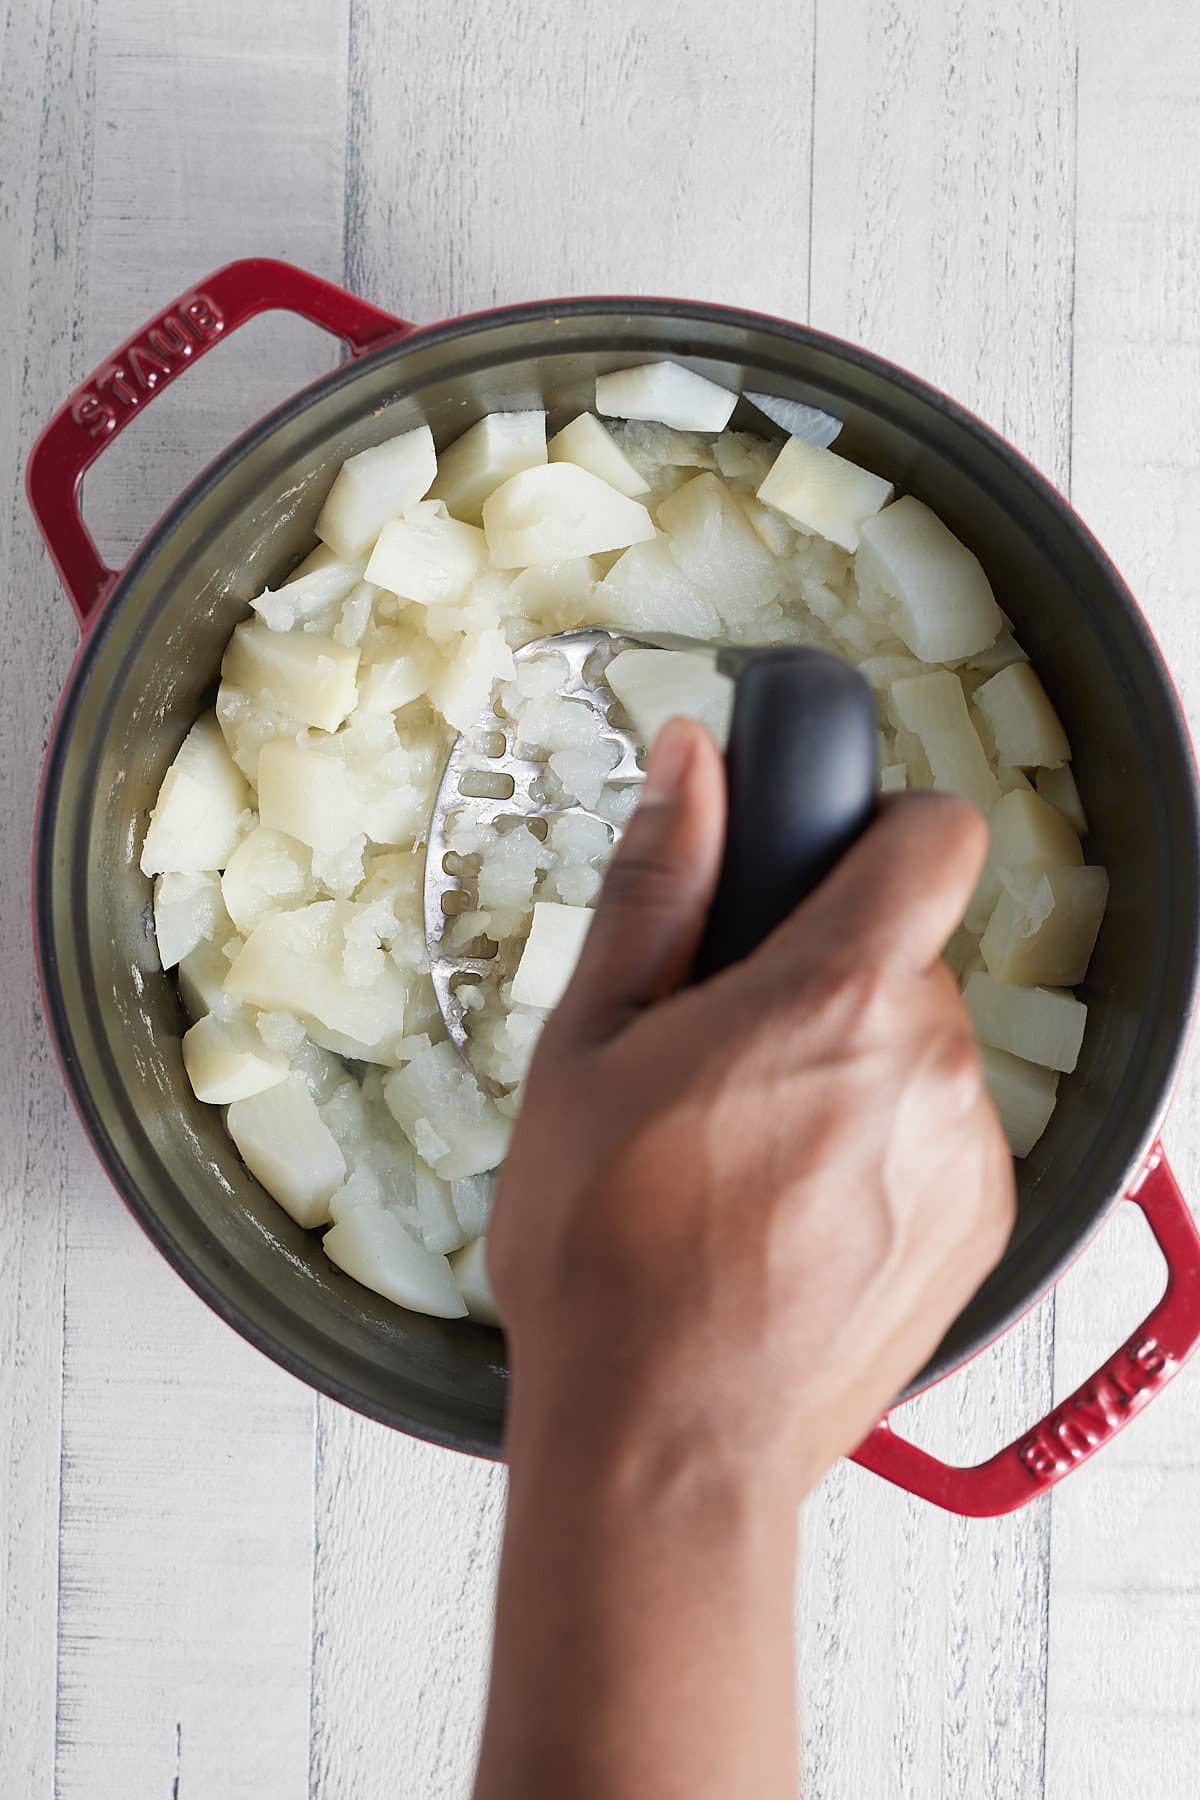 mashing cooked turnips